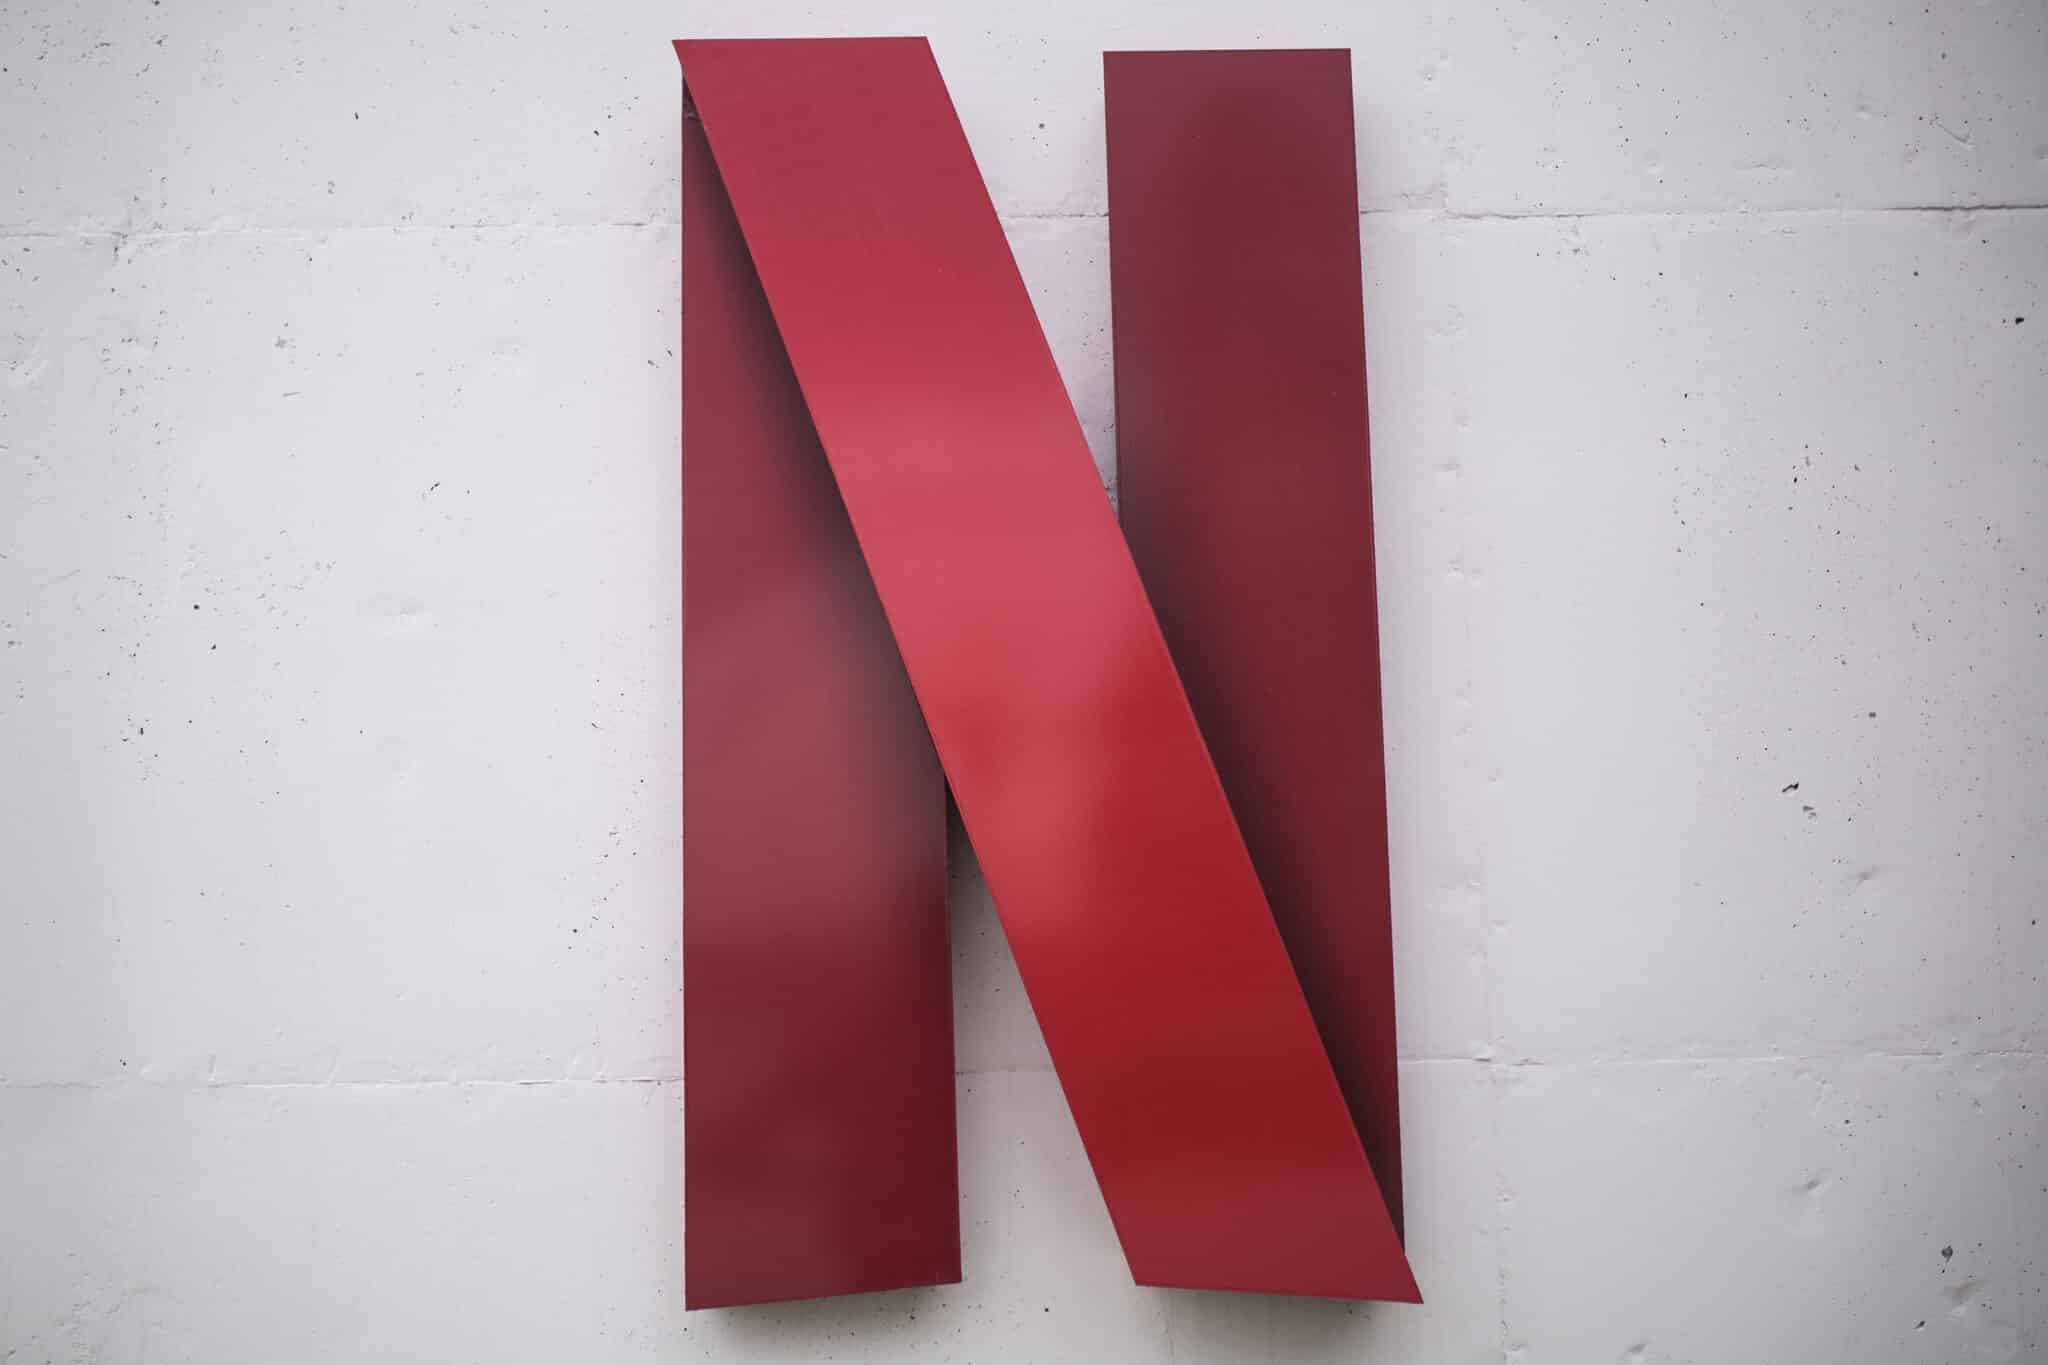 Logo de Netflix de la sede de Netflix en España en Tres Cantos, Madrid